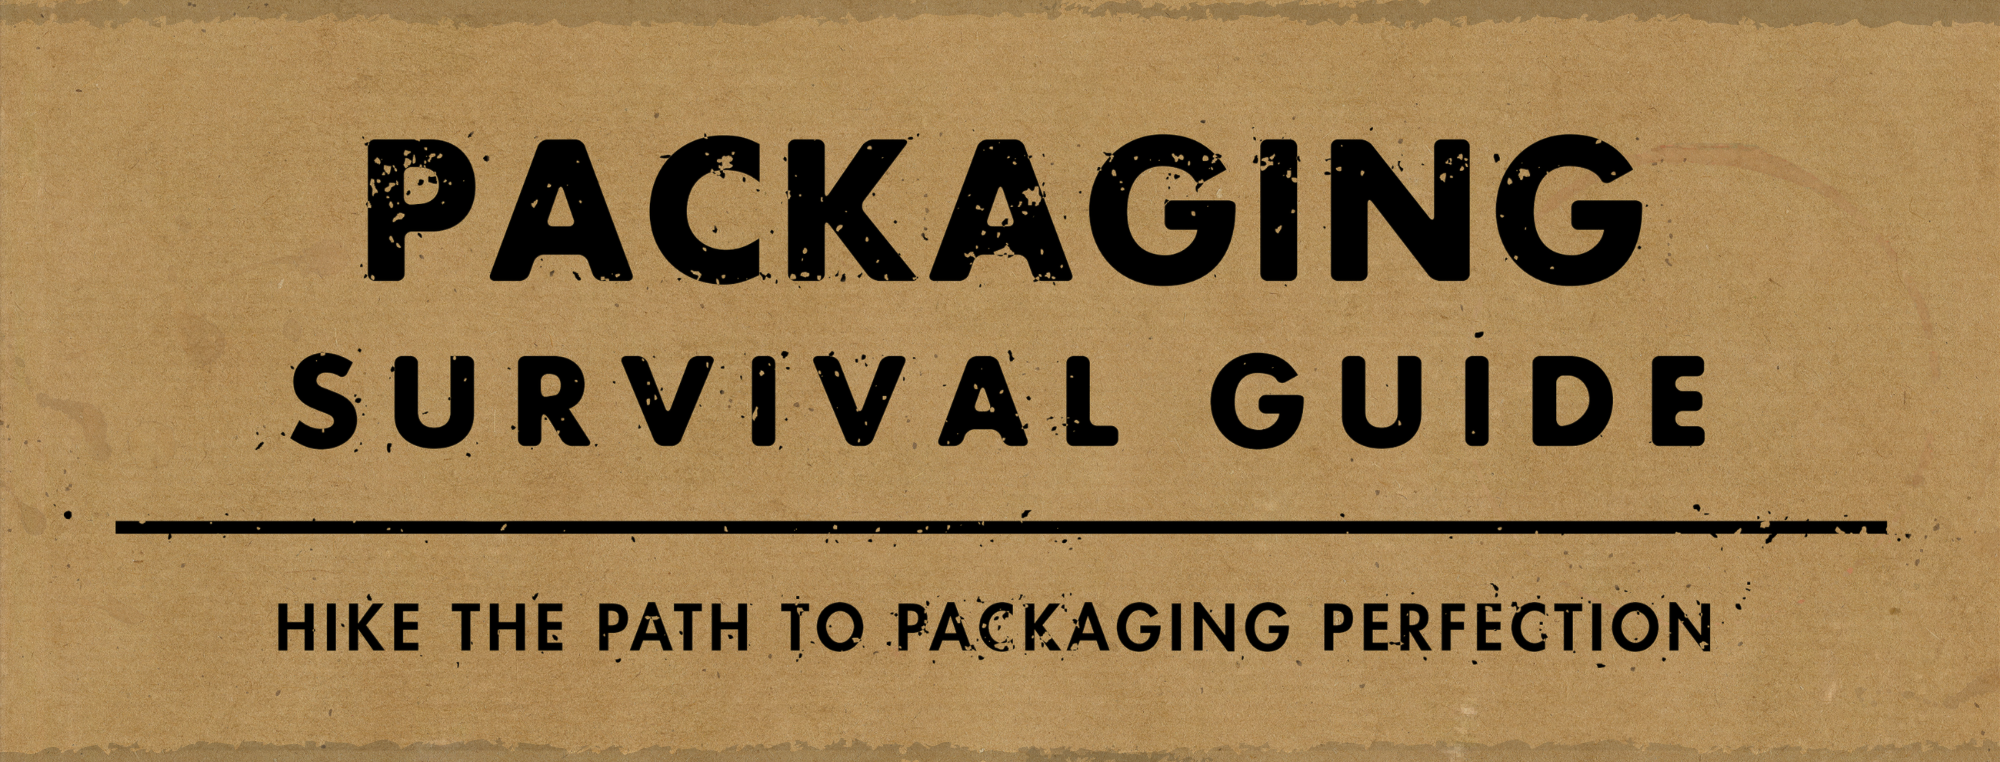 Packaging Survival Guide